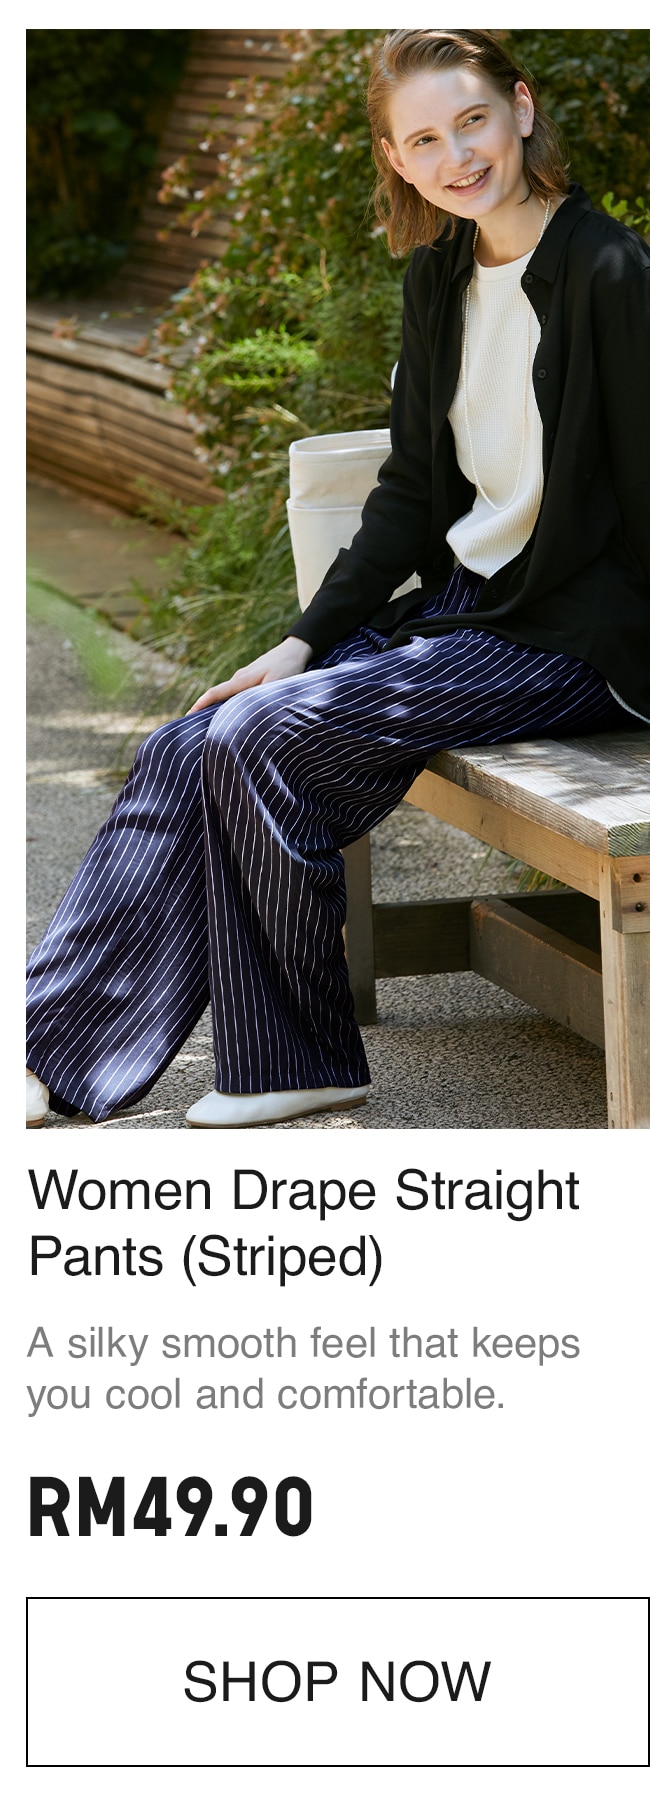 WOMEN DRAPE STRAIGHT PANTS